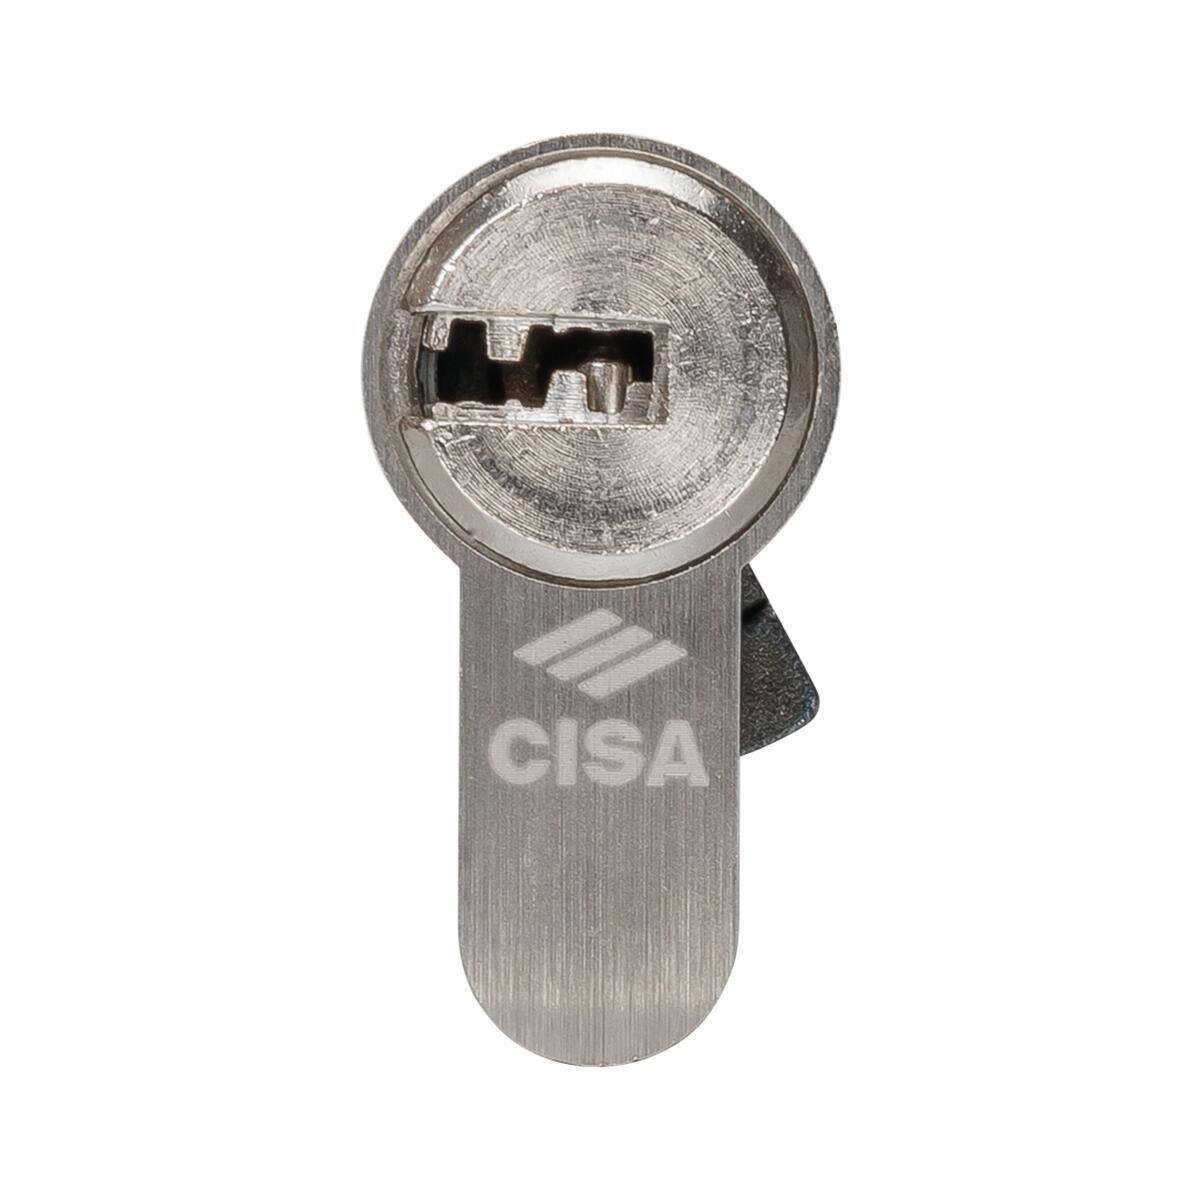 Cilindro Europeo CISA ASIX P8 40 + 40 mm, 2 ingressi chiave in ottone nichelato - 2